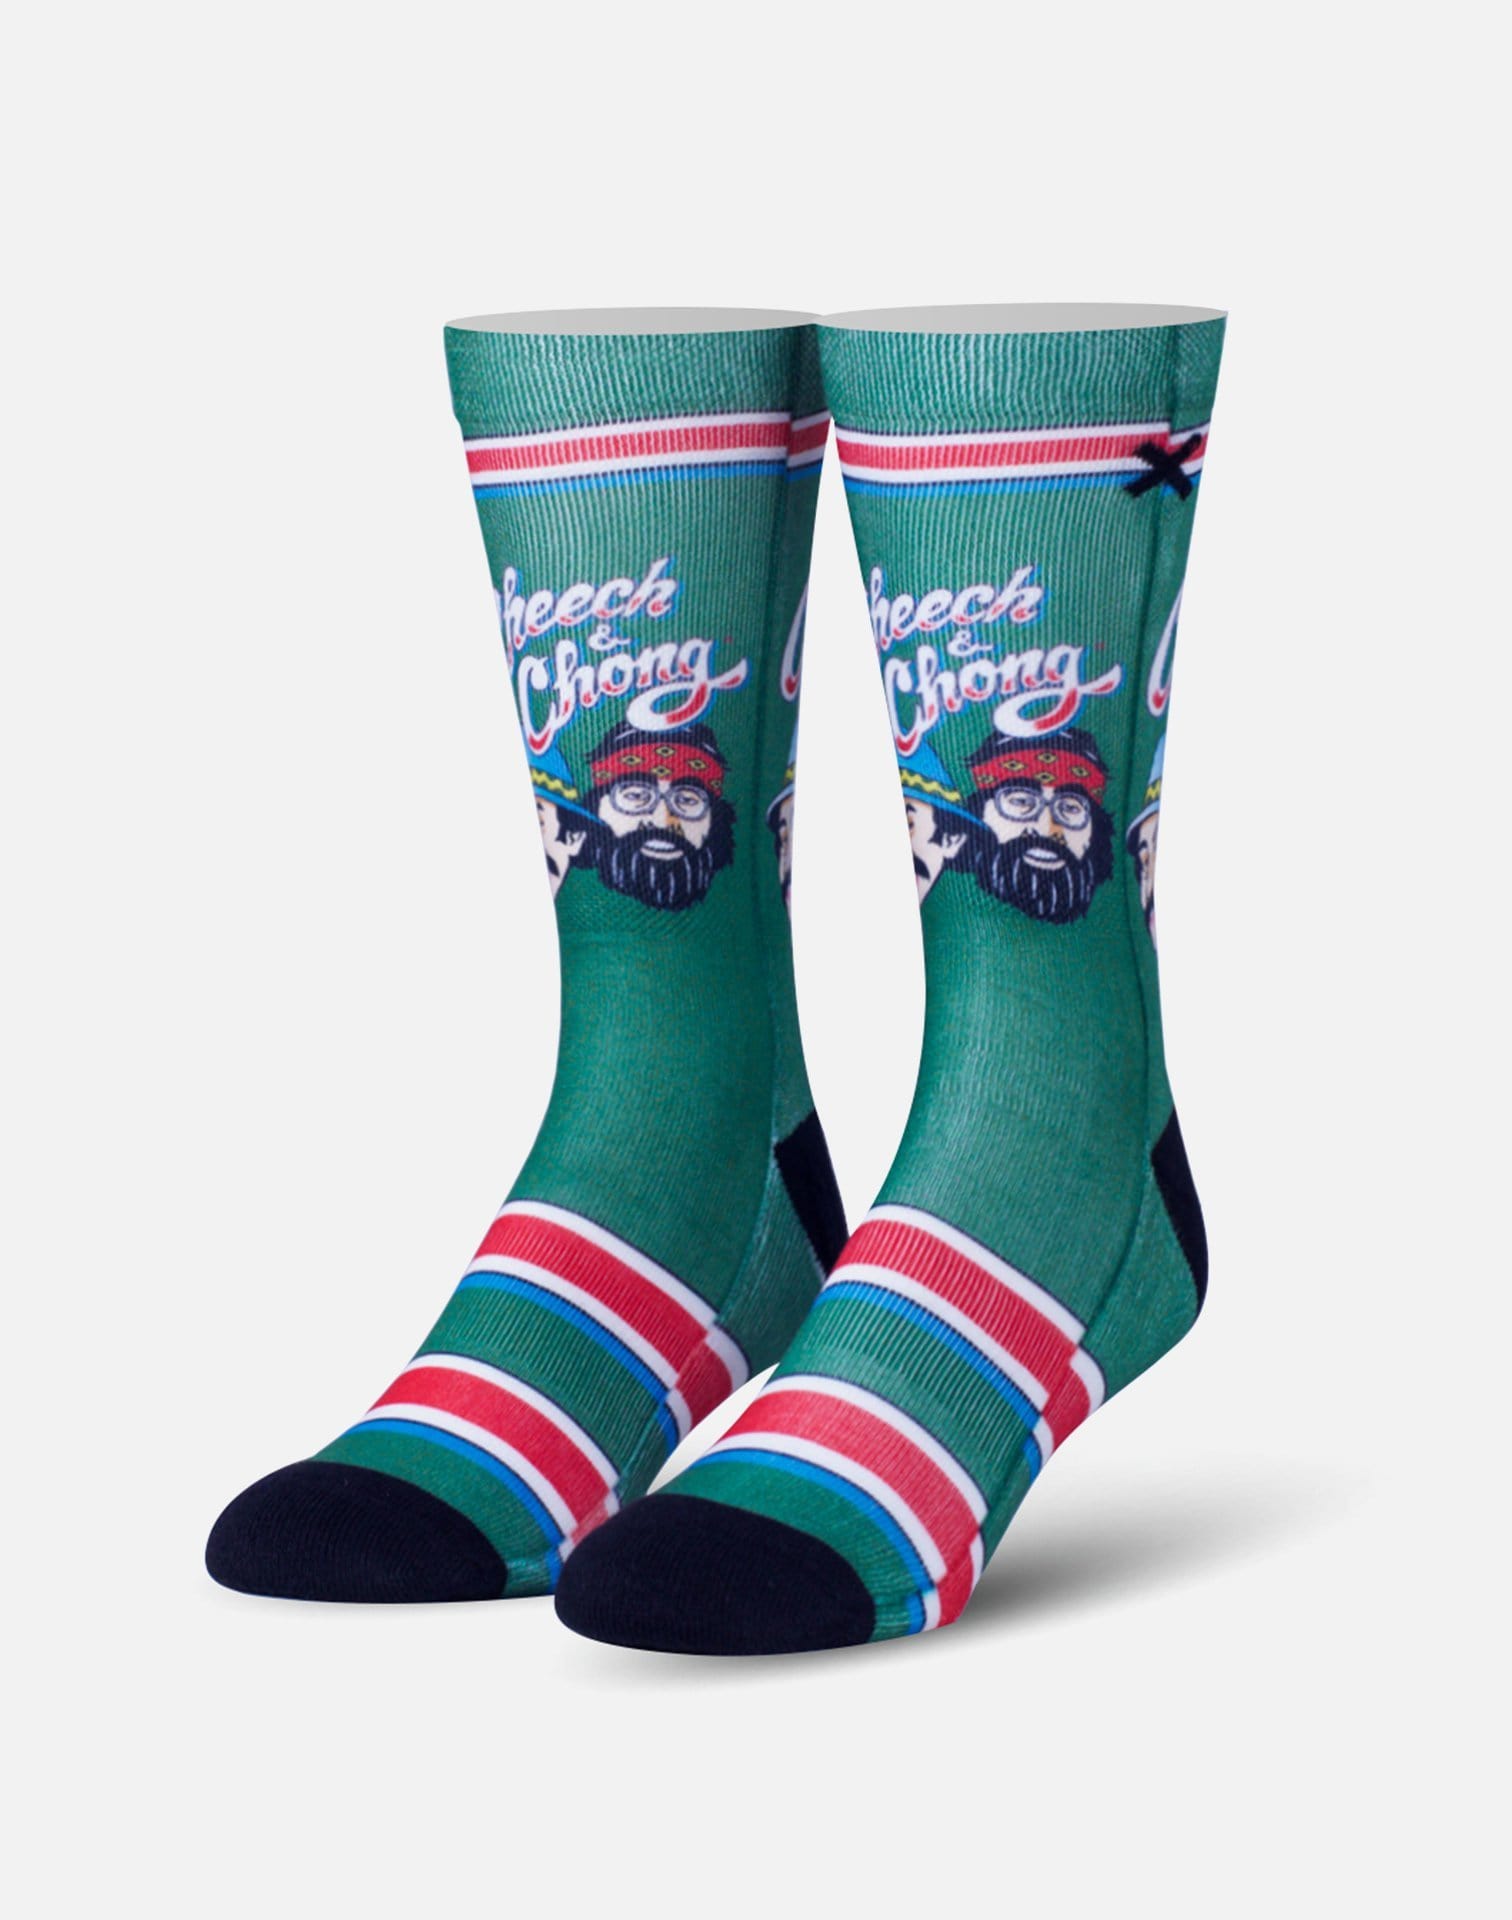 Odd Sox Cheech & Chong Retro Socks